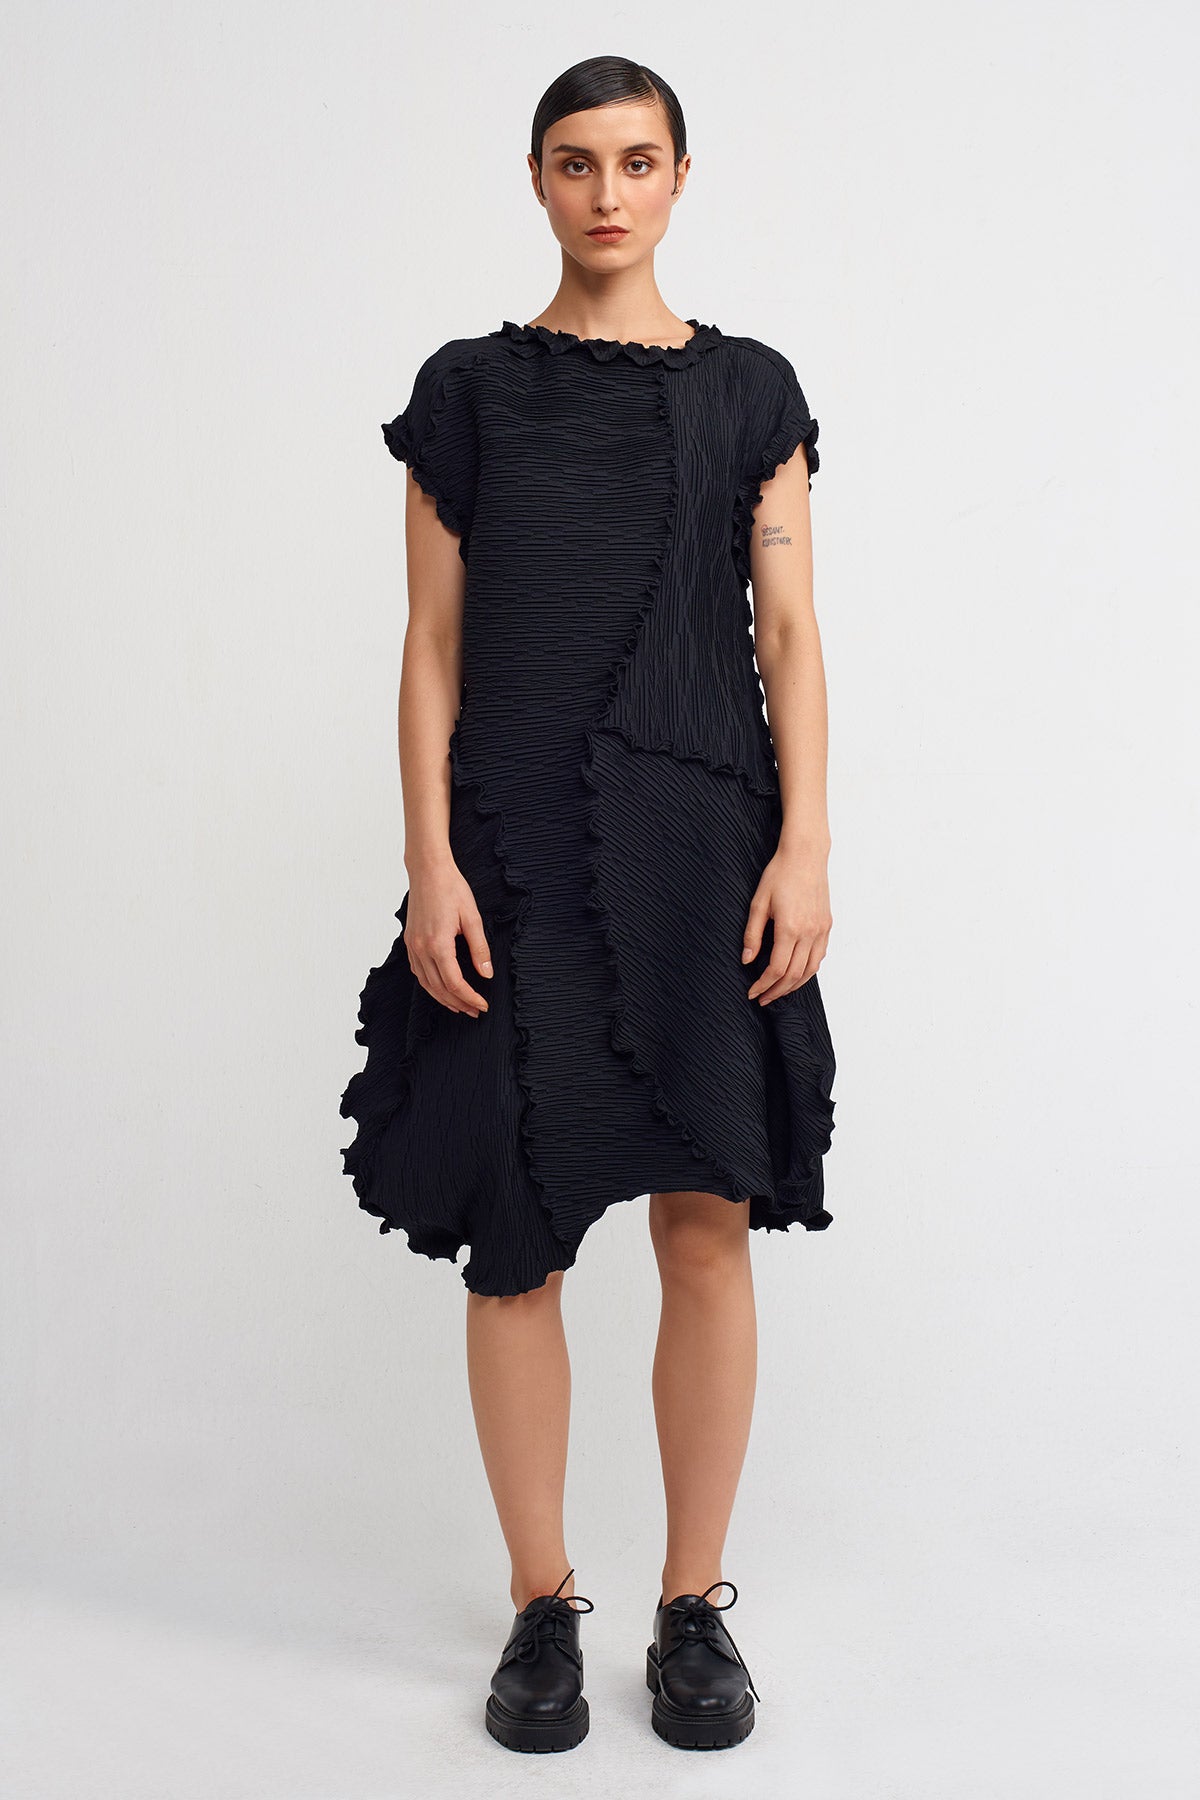 Black Sleeveless Dress with Stitch Details-Y244014037